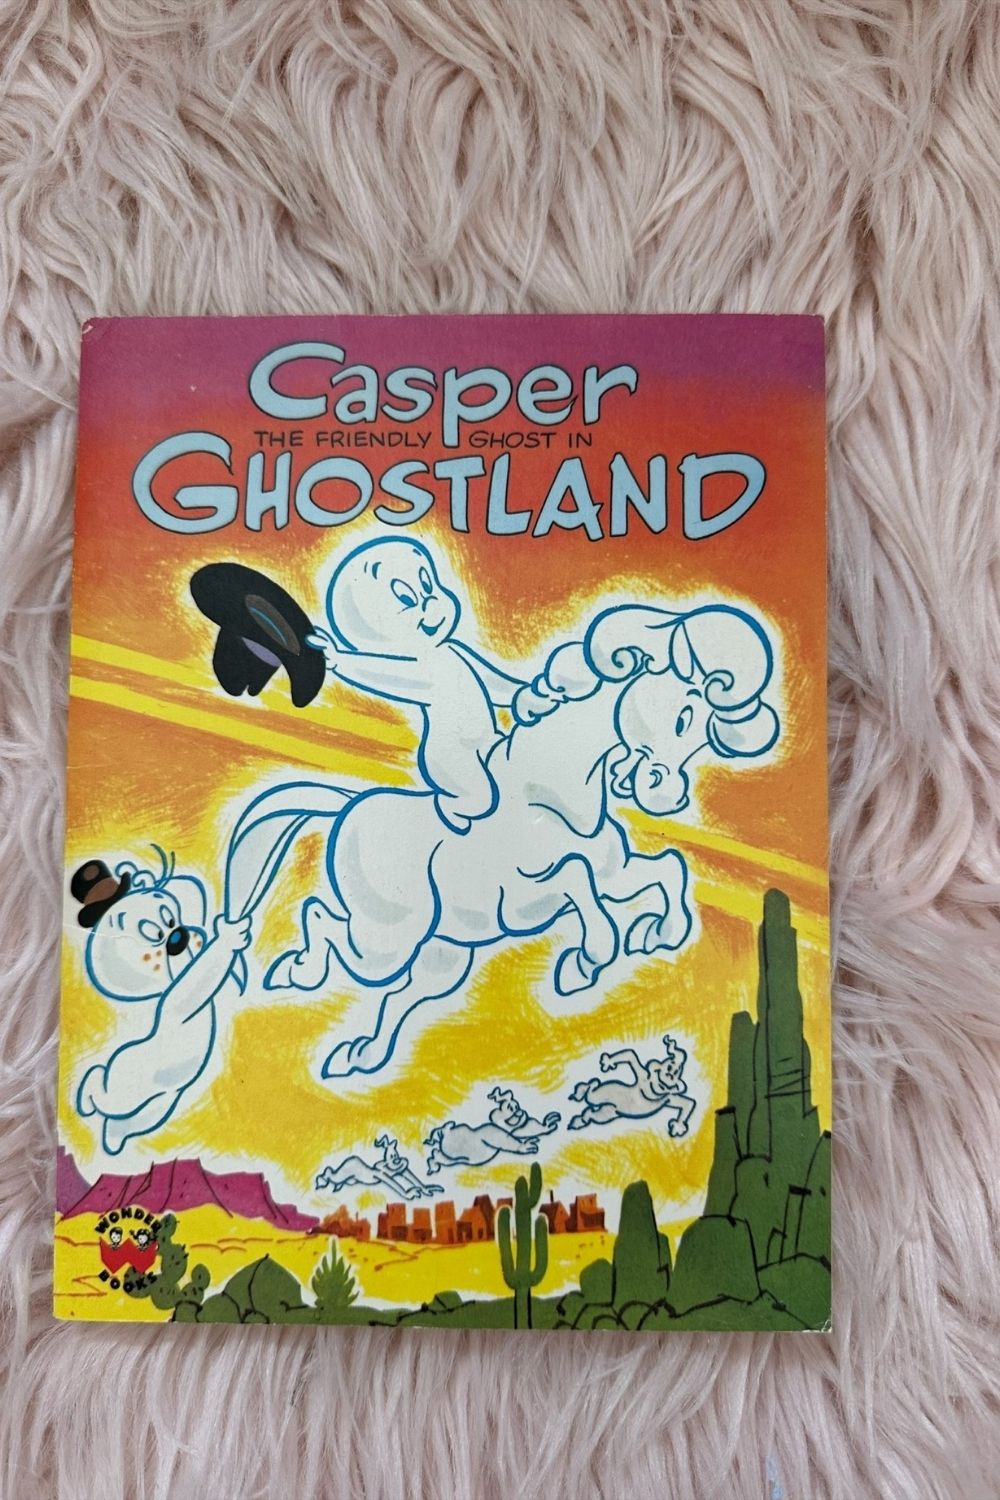 1969 VINTAGE CASPER THE FRIENDLY GHOST IN GHOSTLAND BOOK*